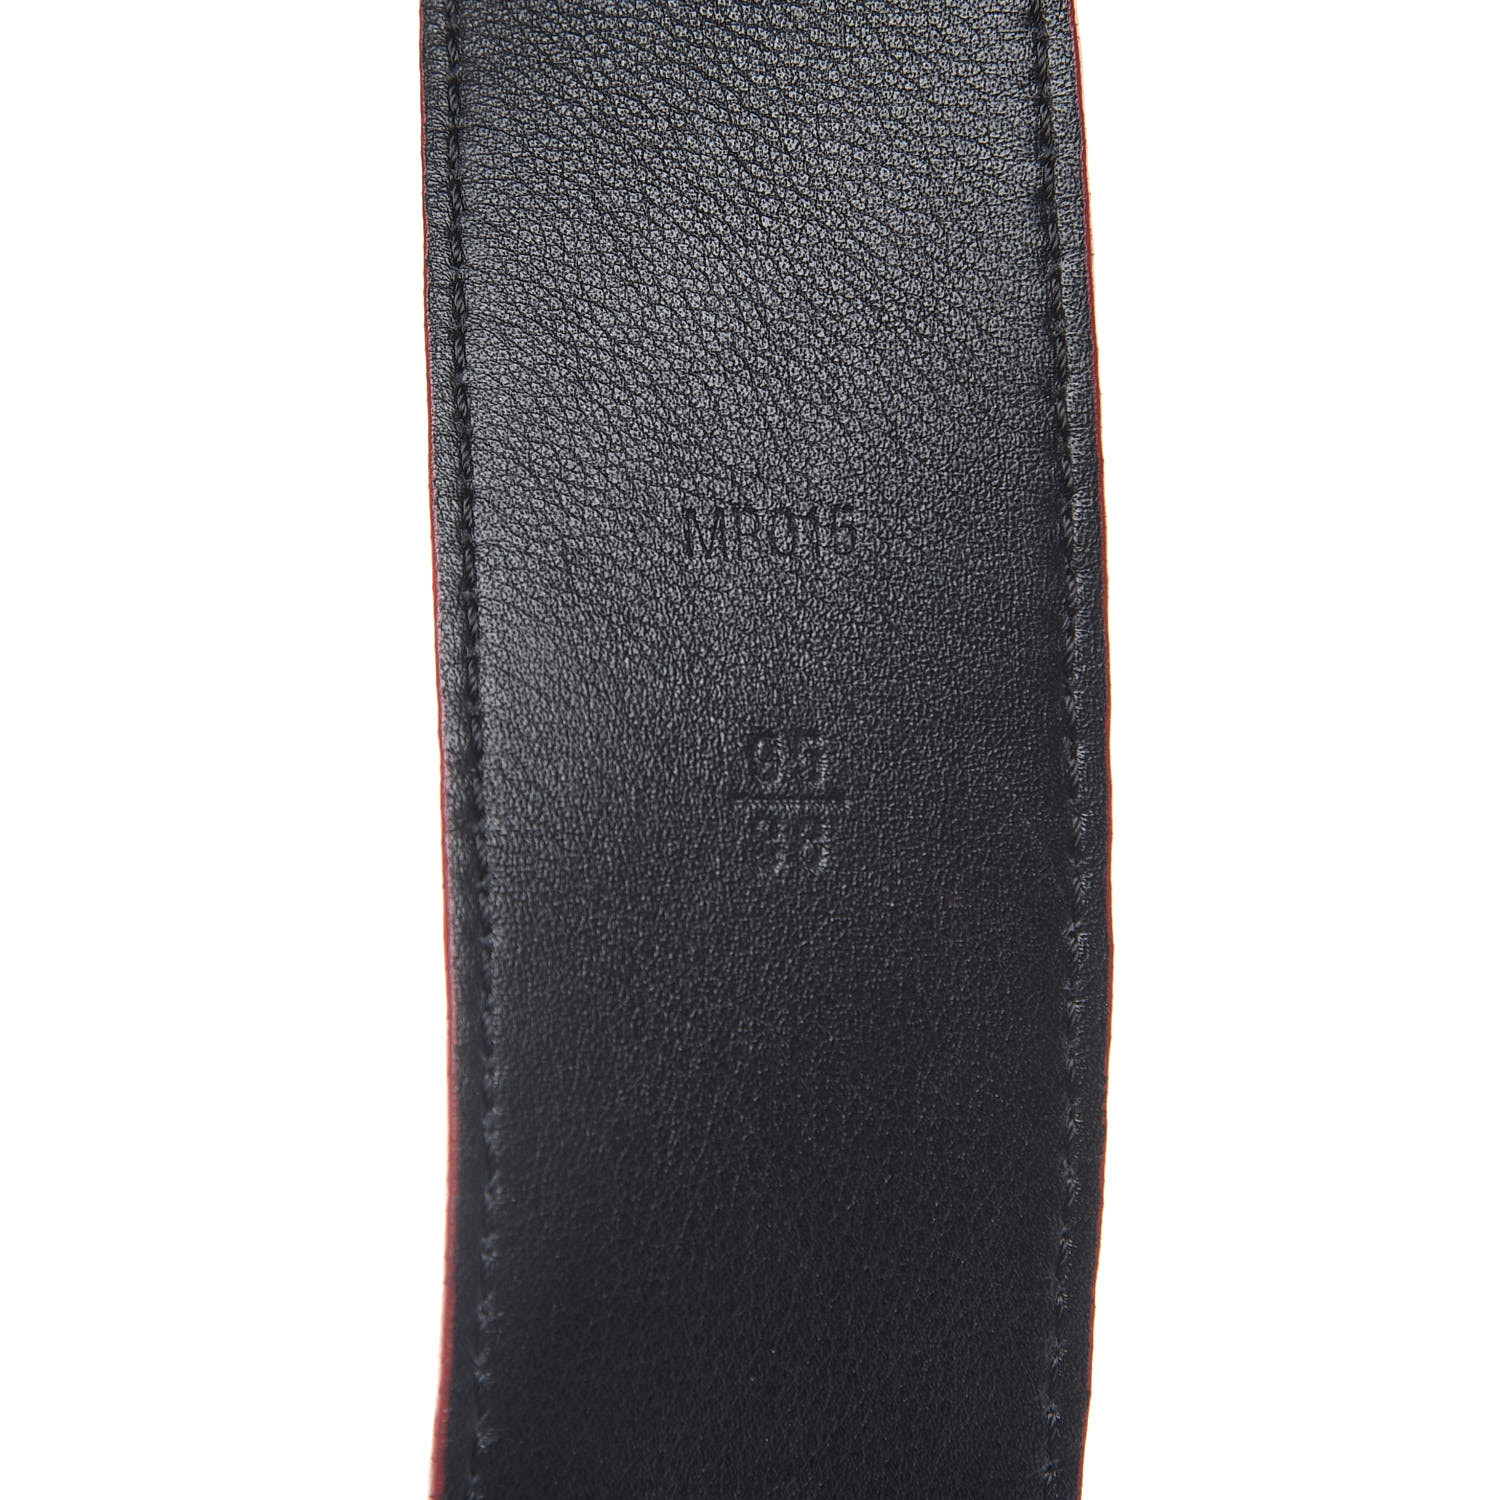 Louis Vuitton x Supreme Initiales Monogram Brown Reversible Belt